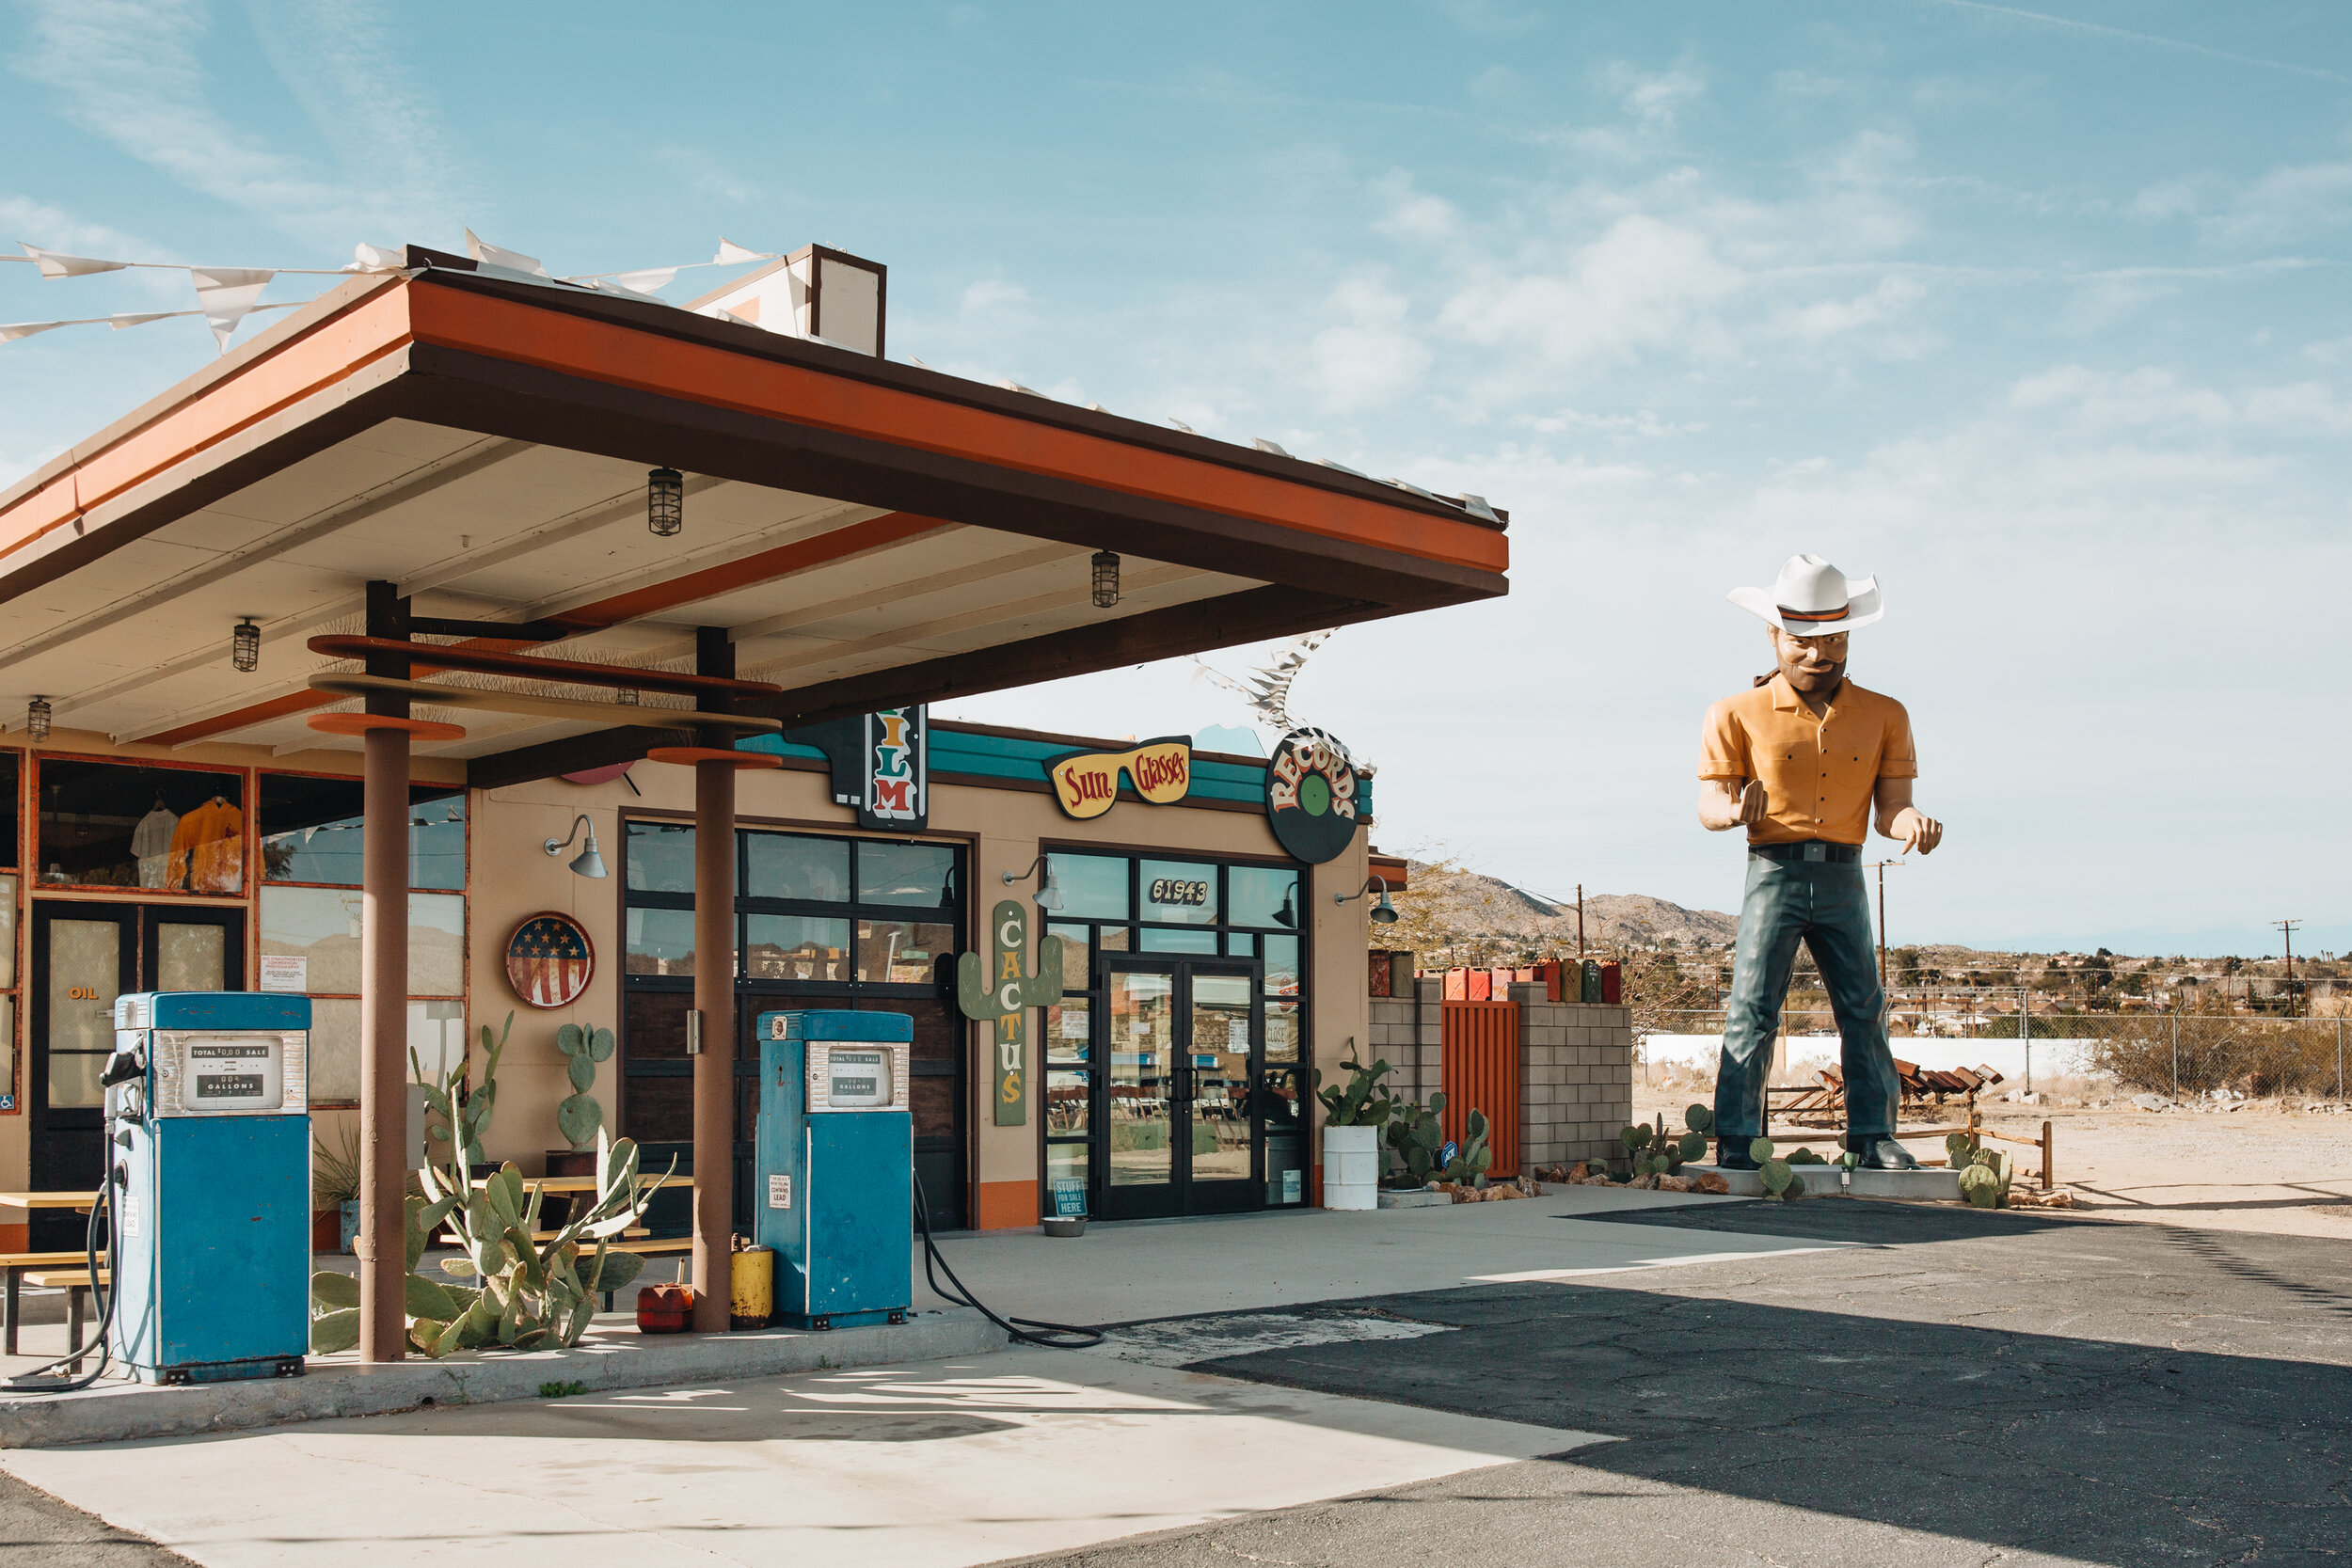 Visit the 20ft Cowboy Big Josh at The Station Gift Shop